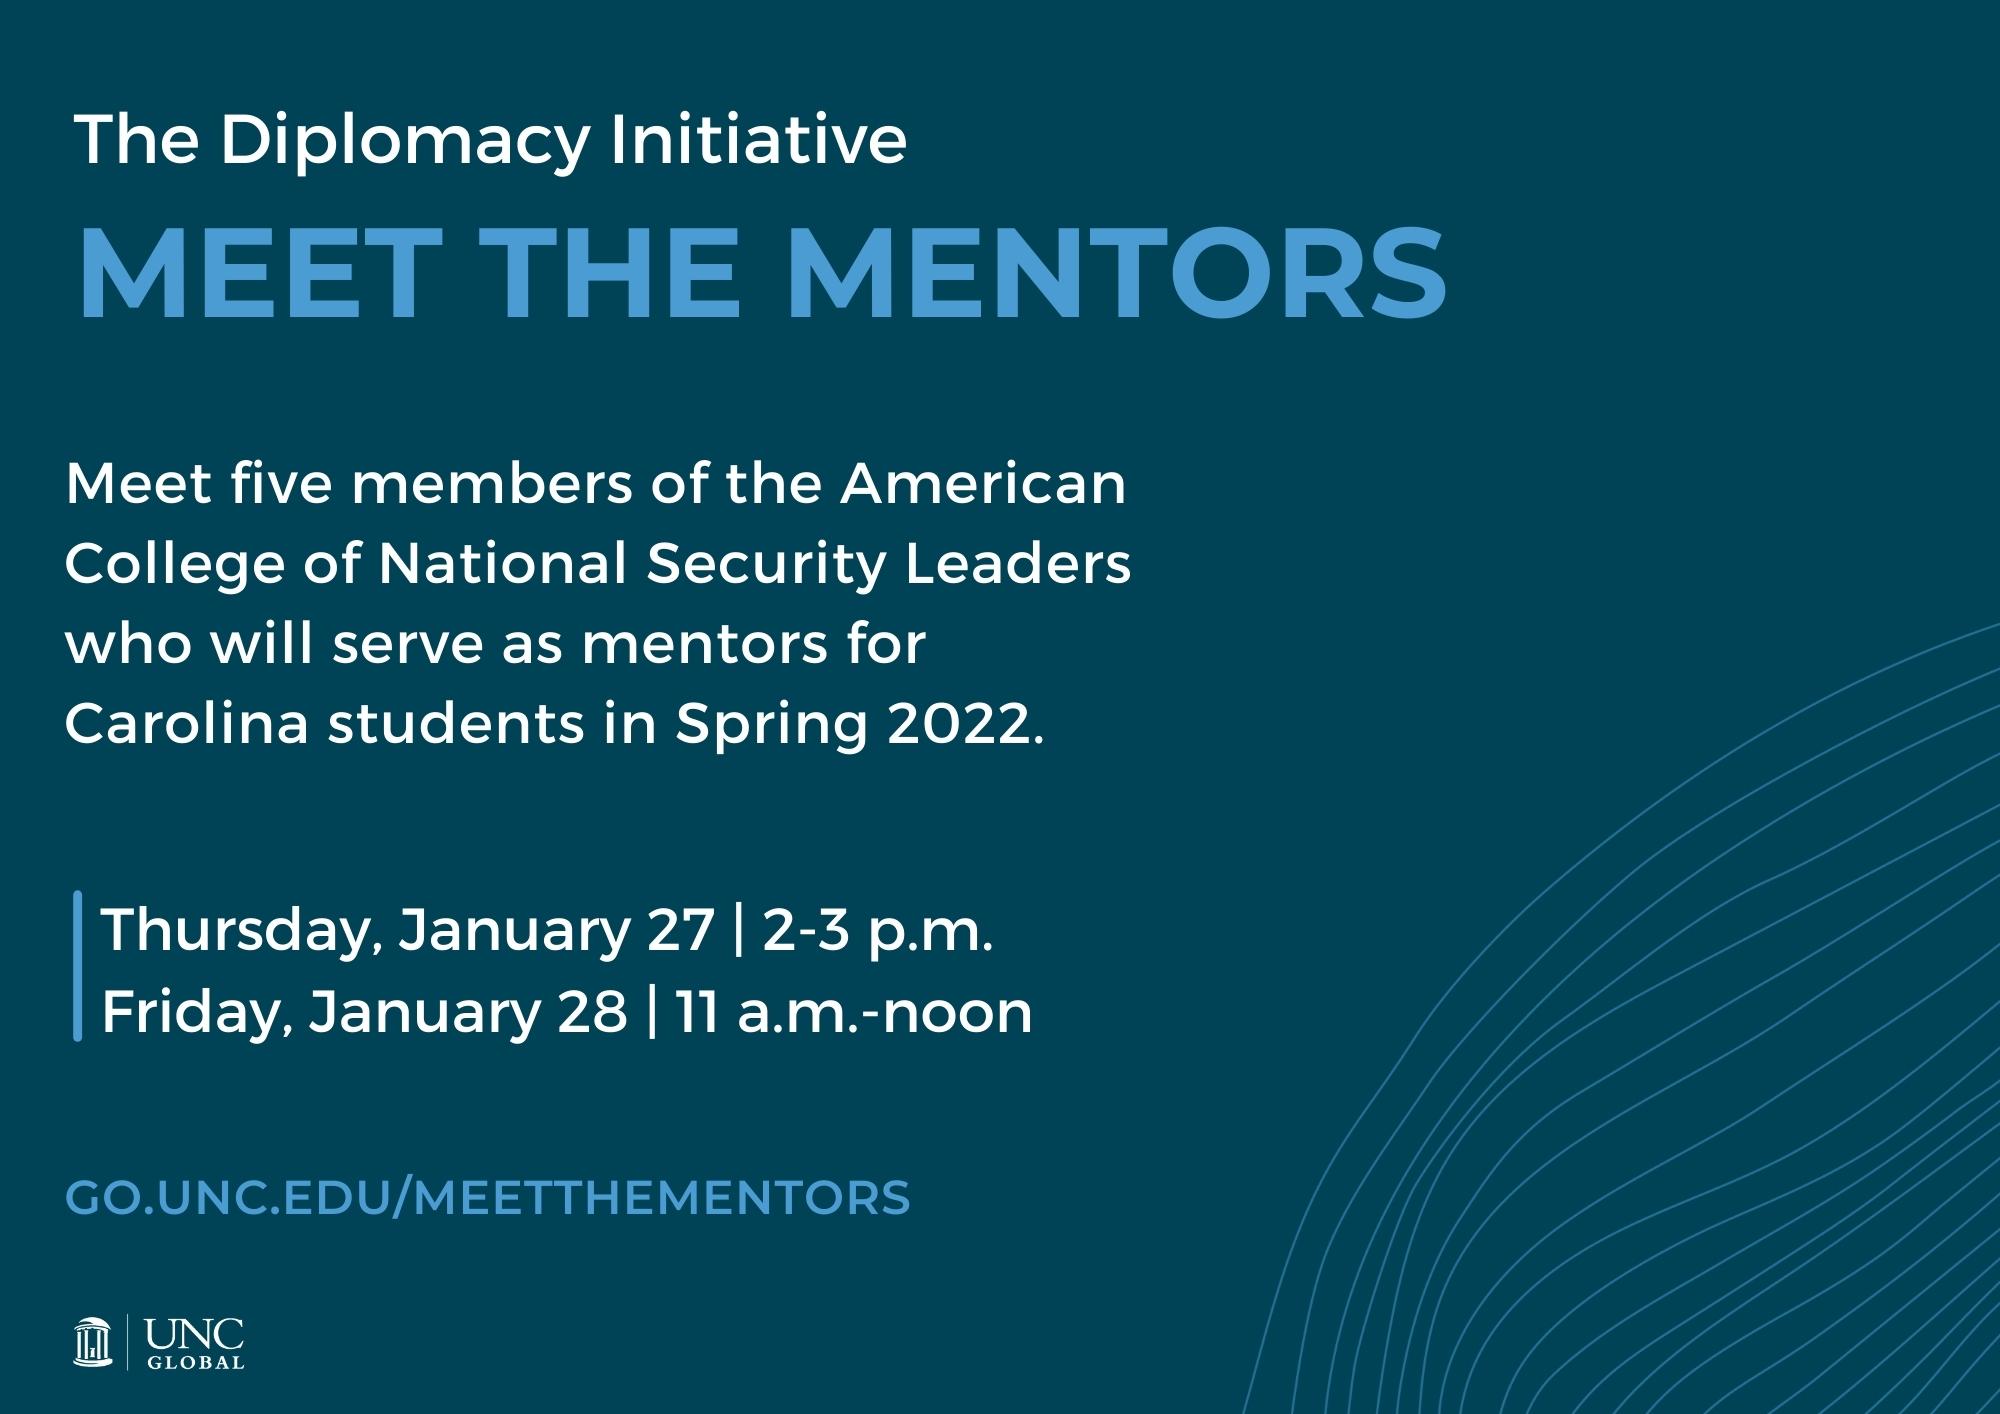 Meet the Mentors: Diplomacy Initiative